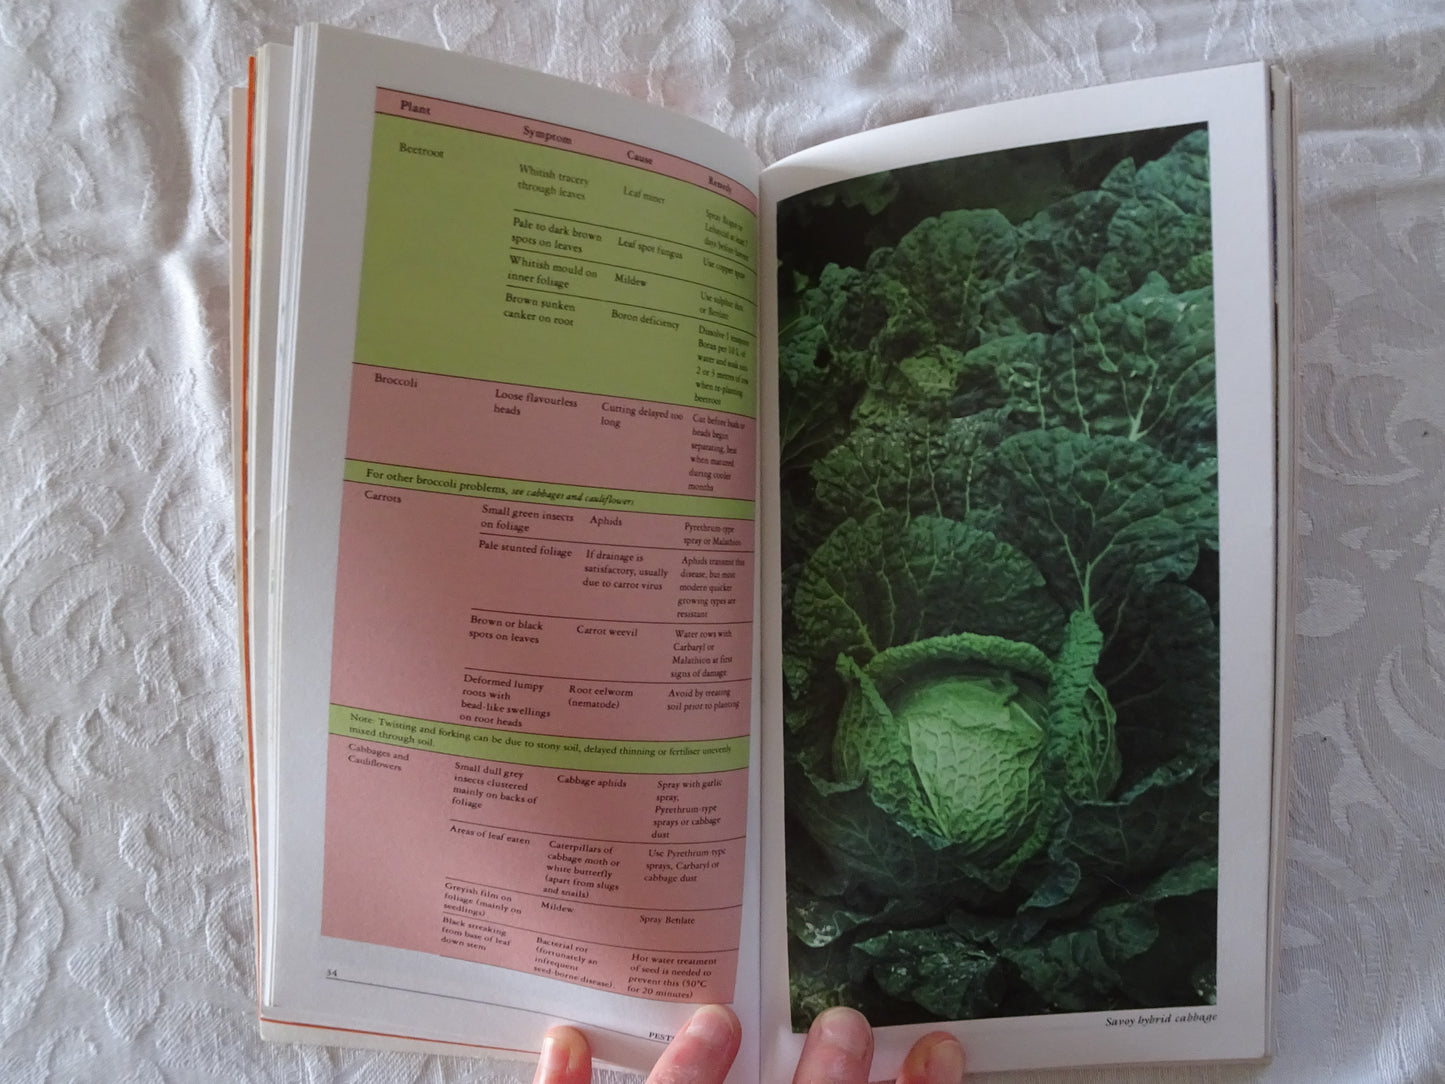 Allan Seale's Garden Book of Pests & Diseases